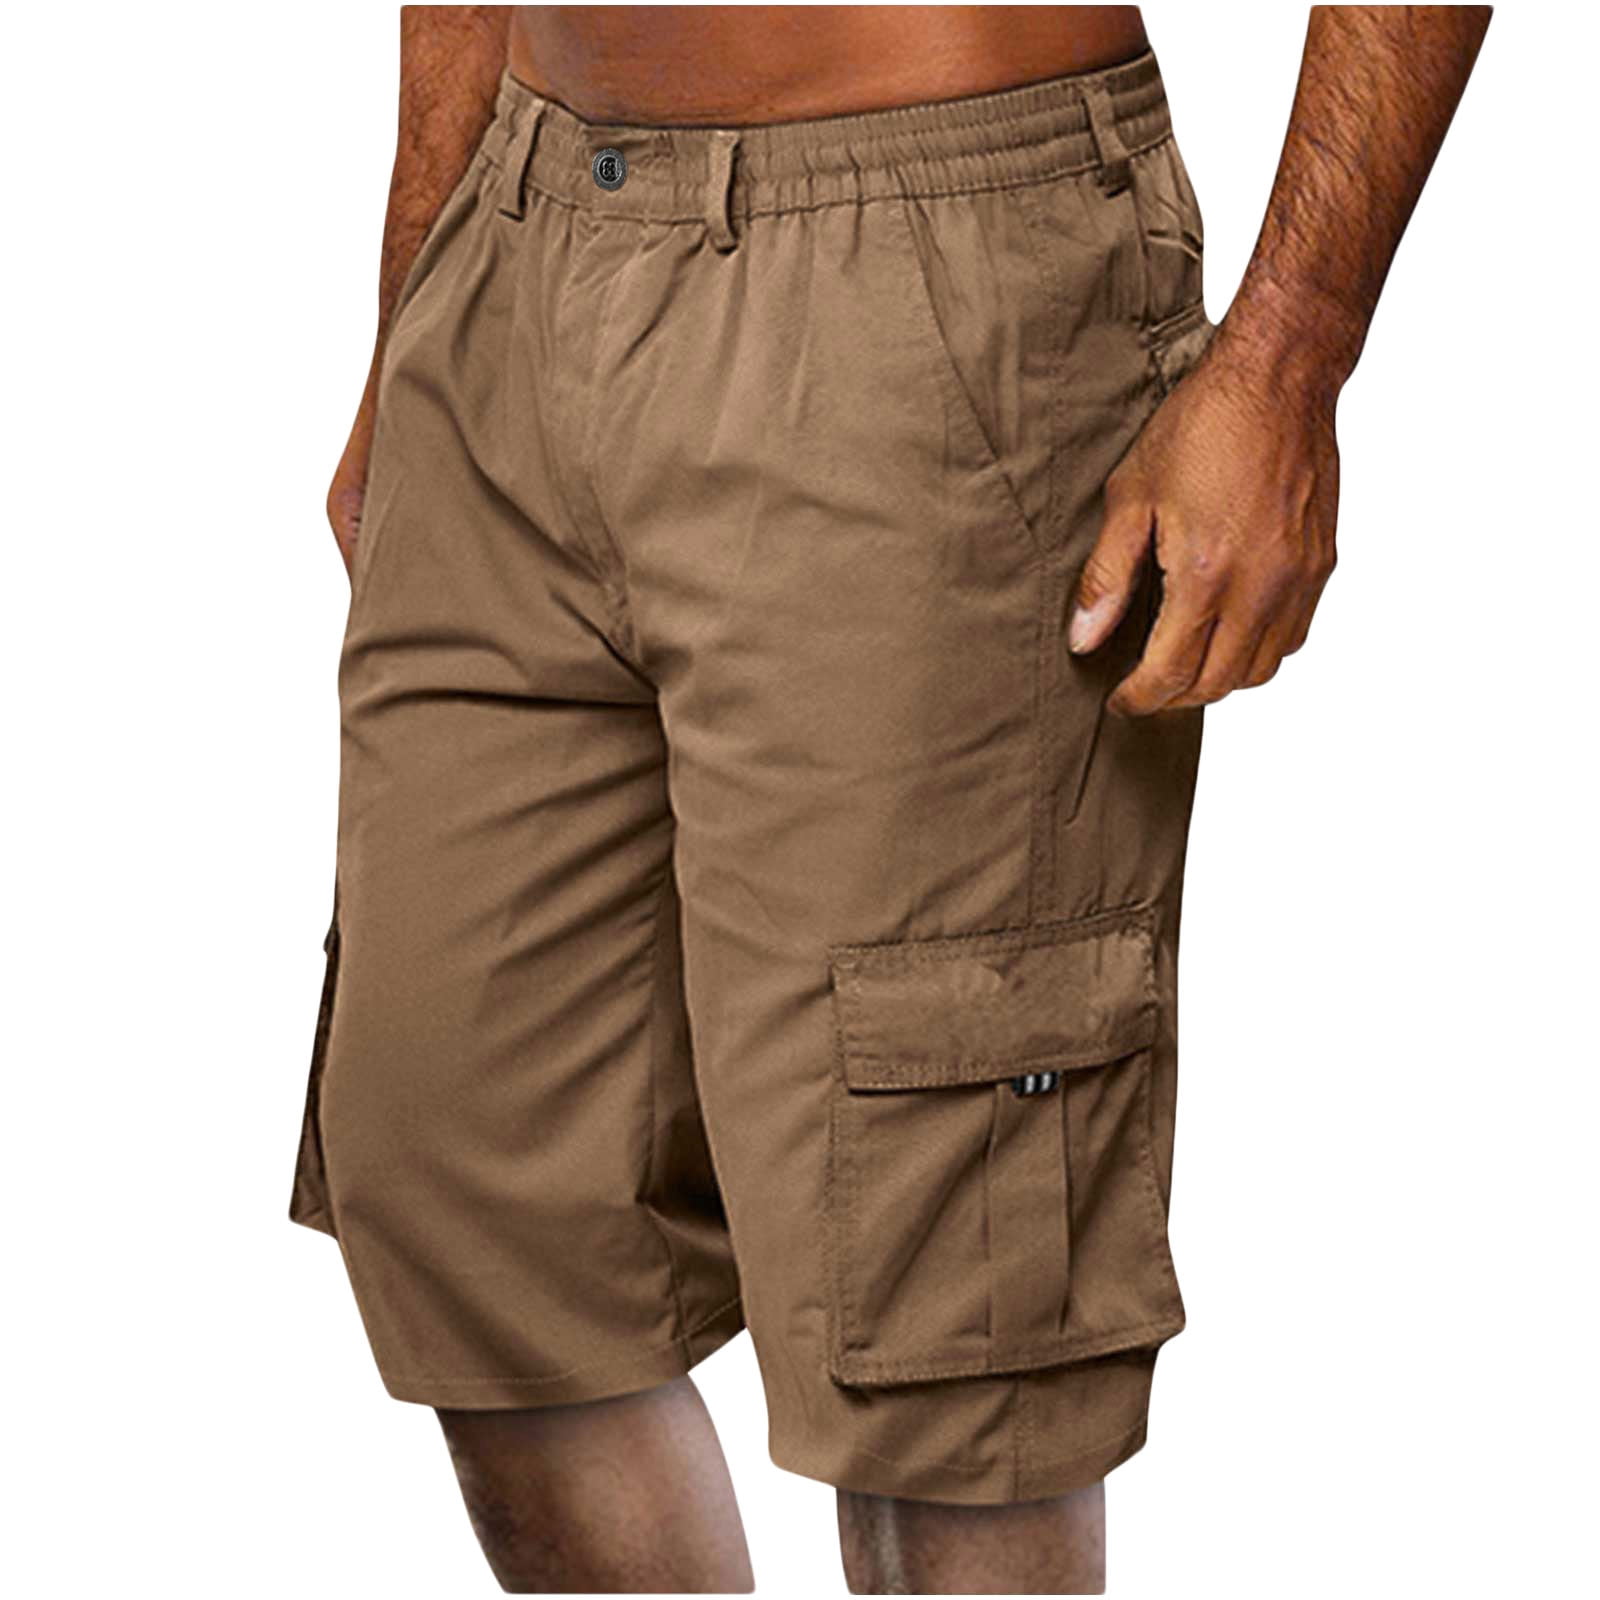 Men's Outdoor Cargo Shorts Zip Pockets Casual Classic Fit Shorts Elastic  Waist Beach Jogging Shorts